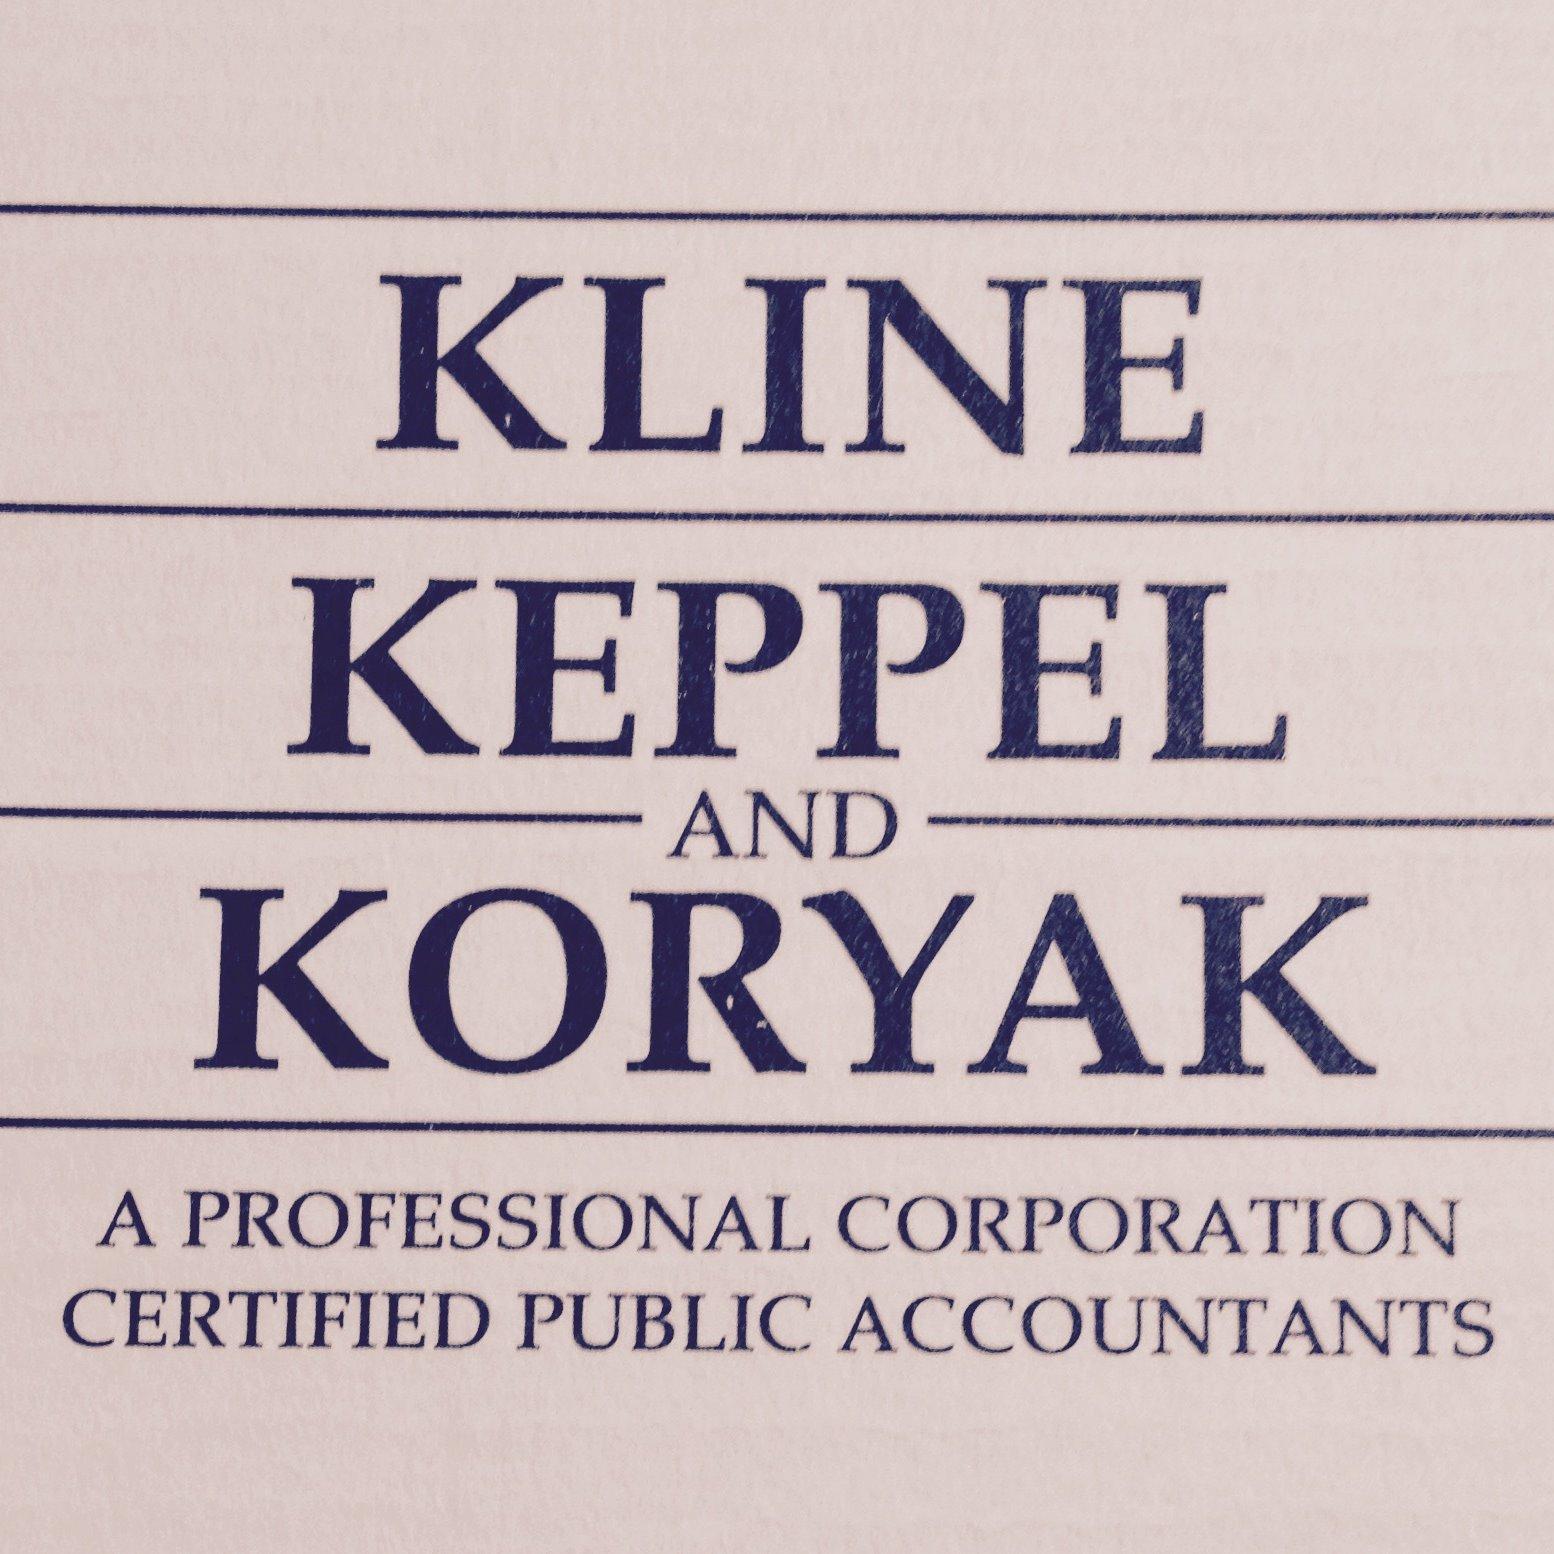 Kline Keppel And Koryak